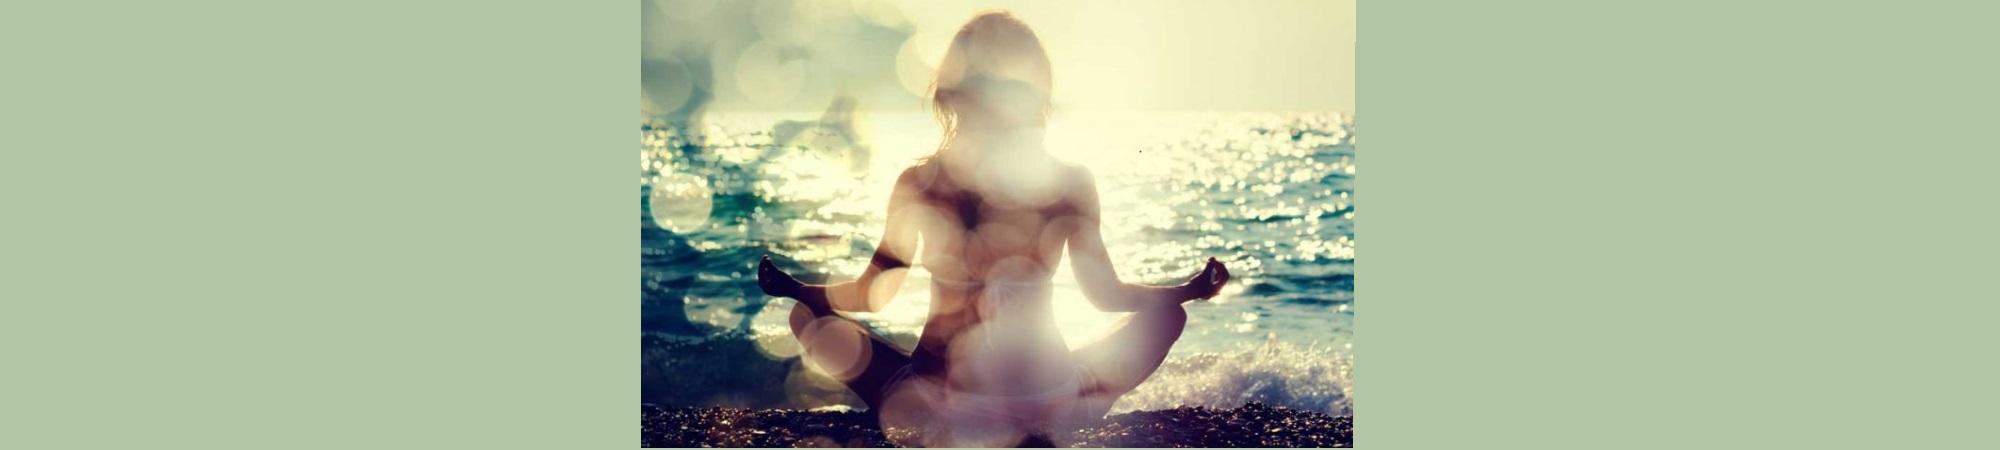 Meditating woman in yoga pose, facing away toward sunlight on ocean water. 